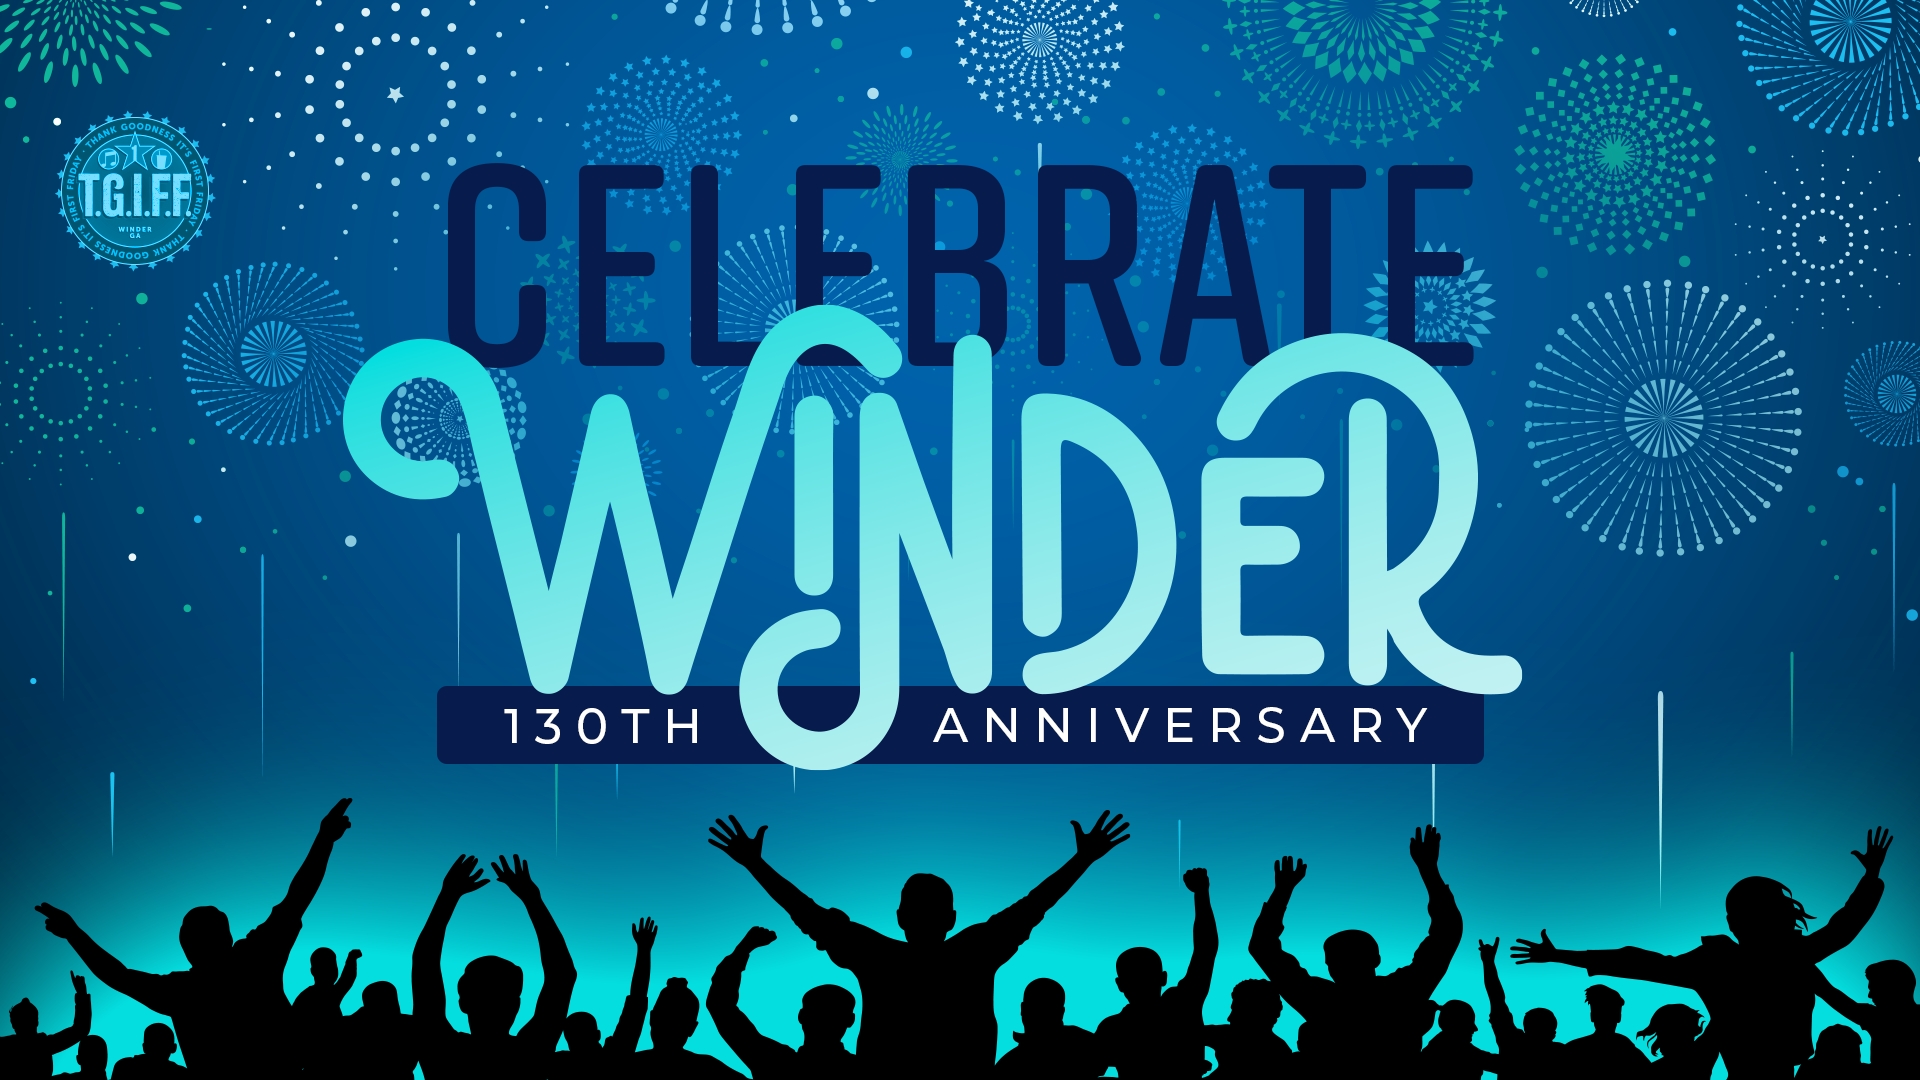 TGIFF Presents: Celebrate Winder